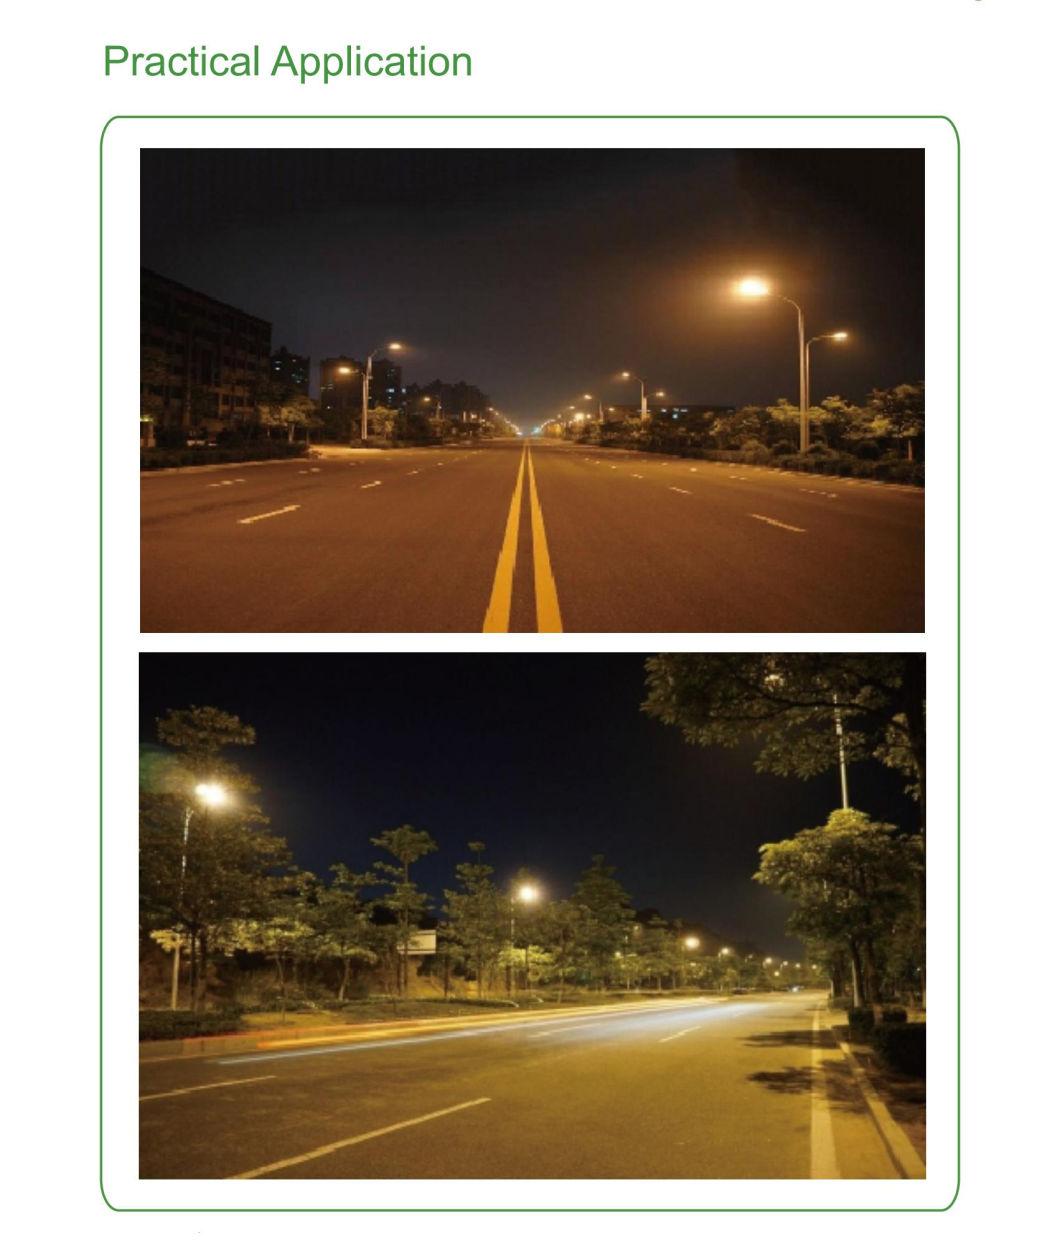 30-250W Integrated LED Street Light Waterproof High Lumen Outdoor Lighting with Motion Sensor